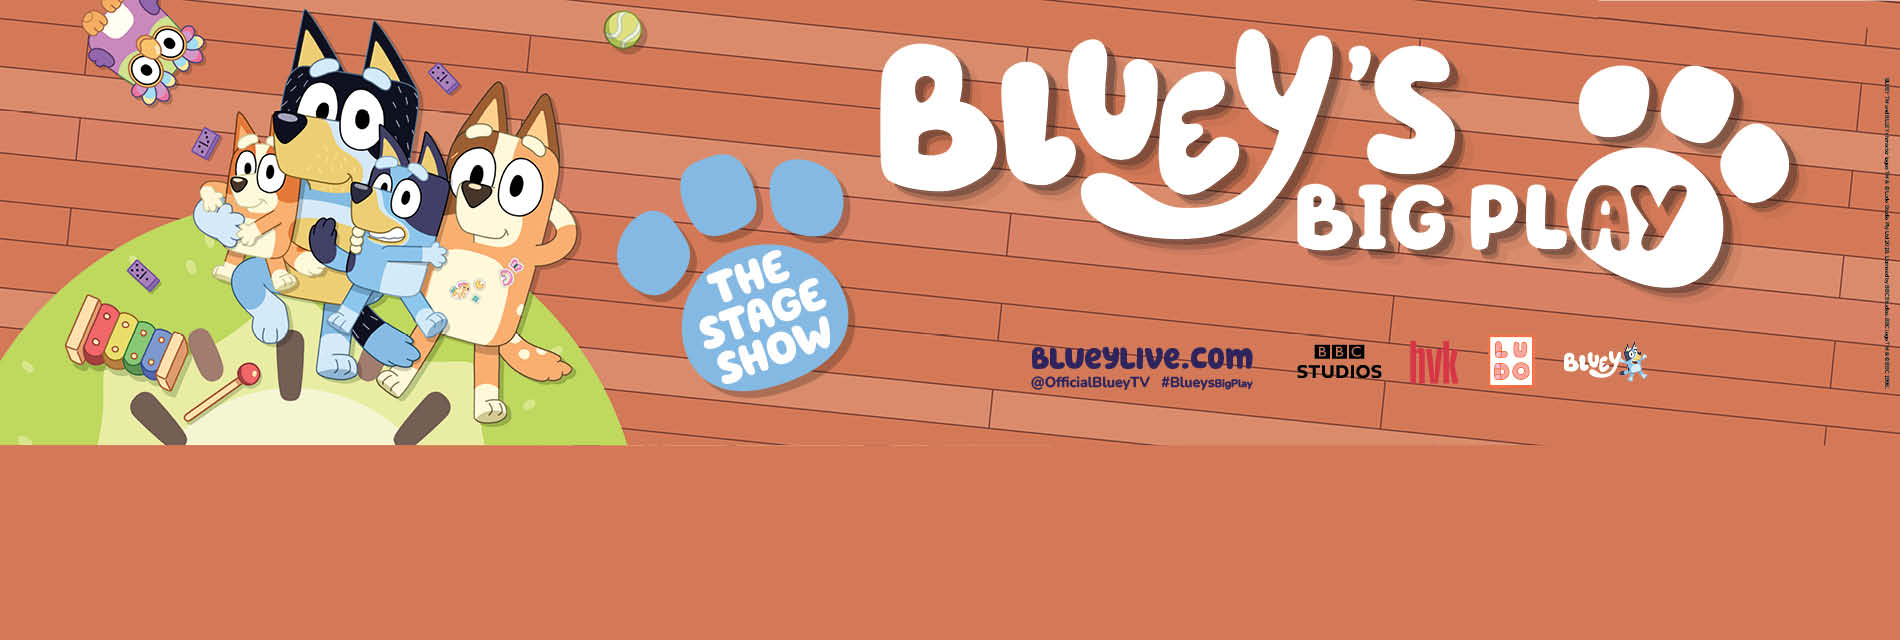 Slide 2: Bluey's Big Play